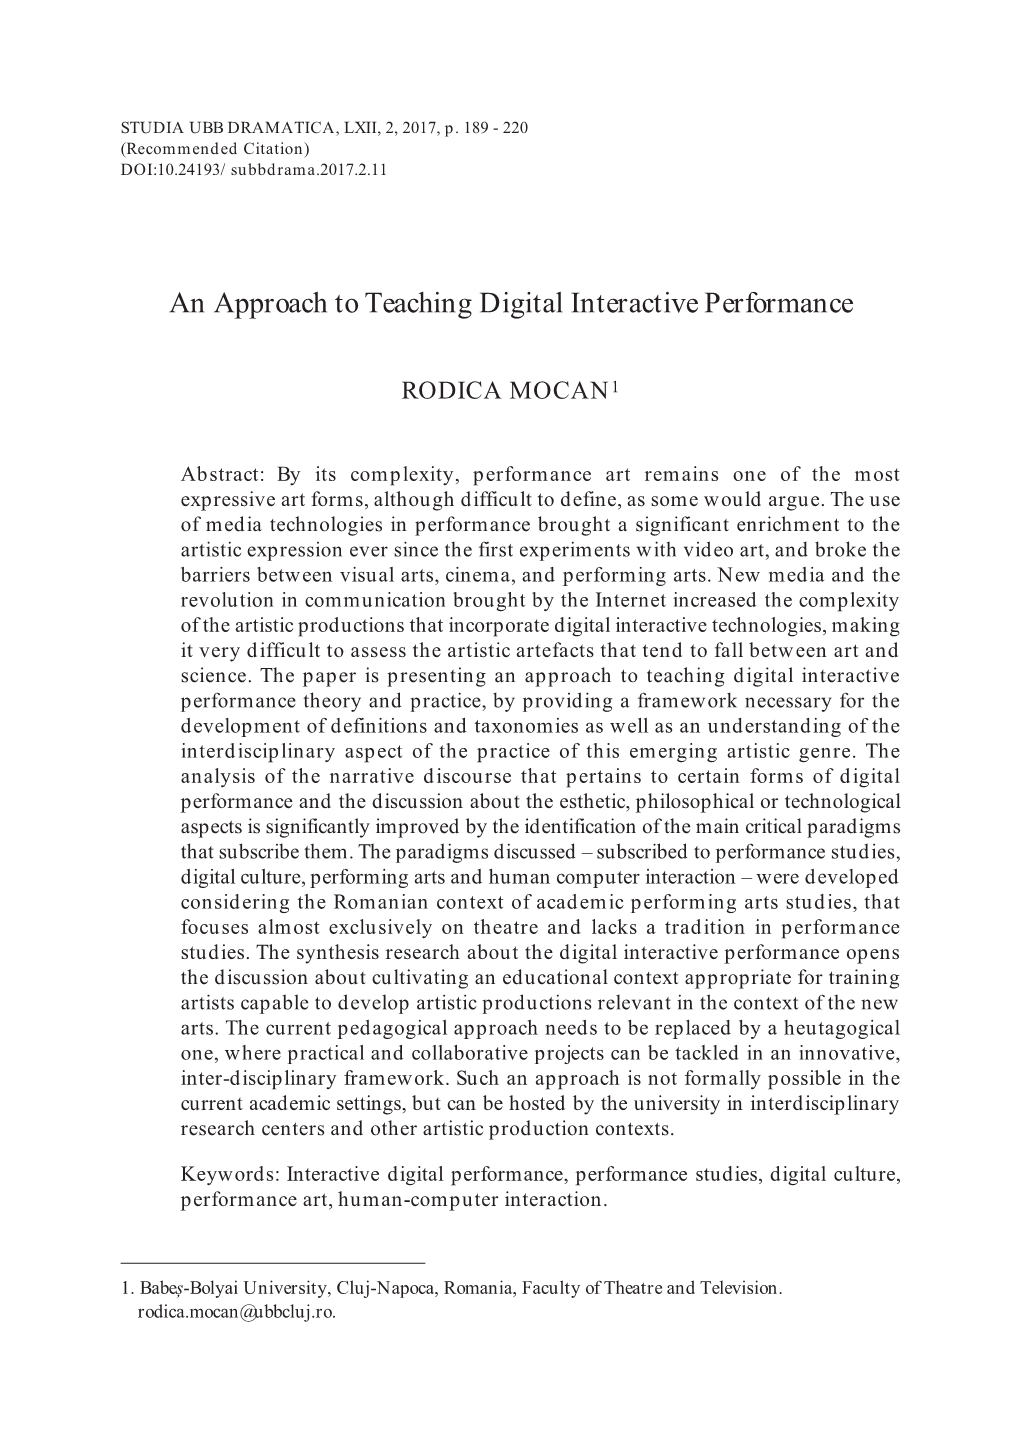 An Approach to Teaching Digital Interactive Performance